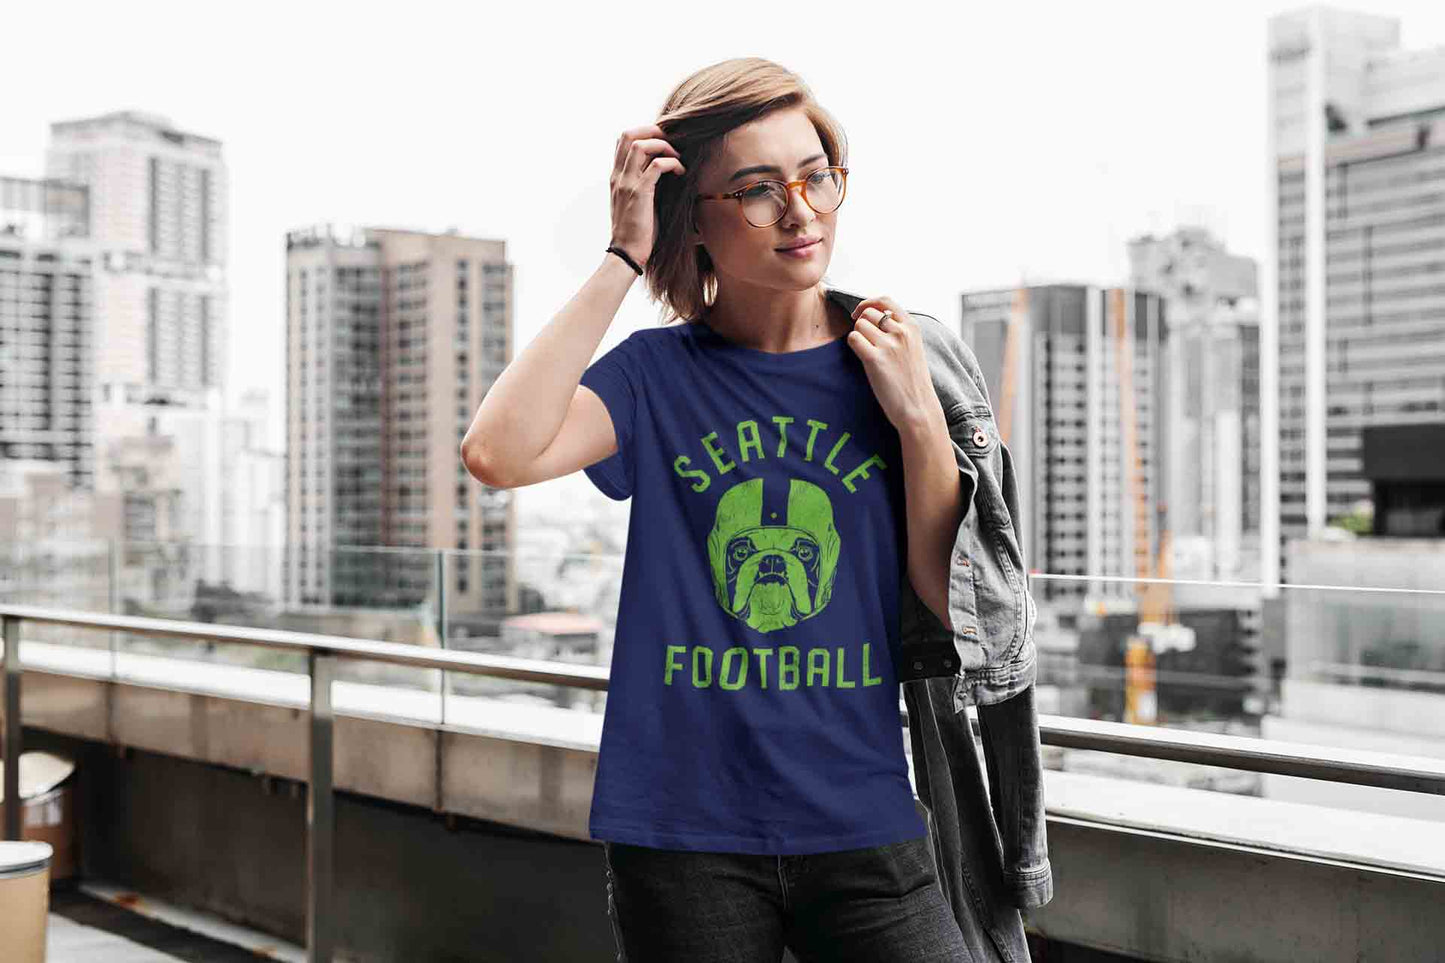 Seattle Football English Bulldog T-Shirt